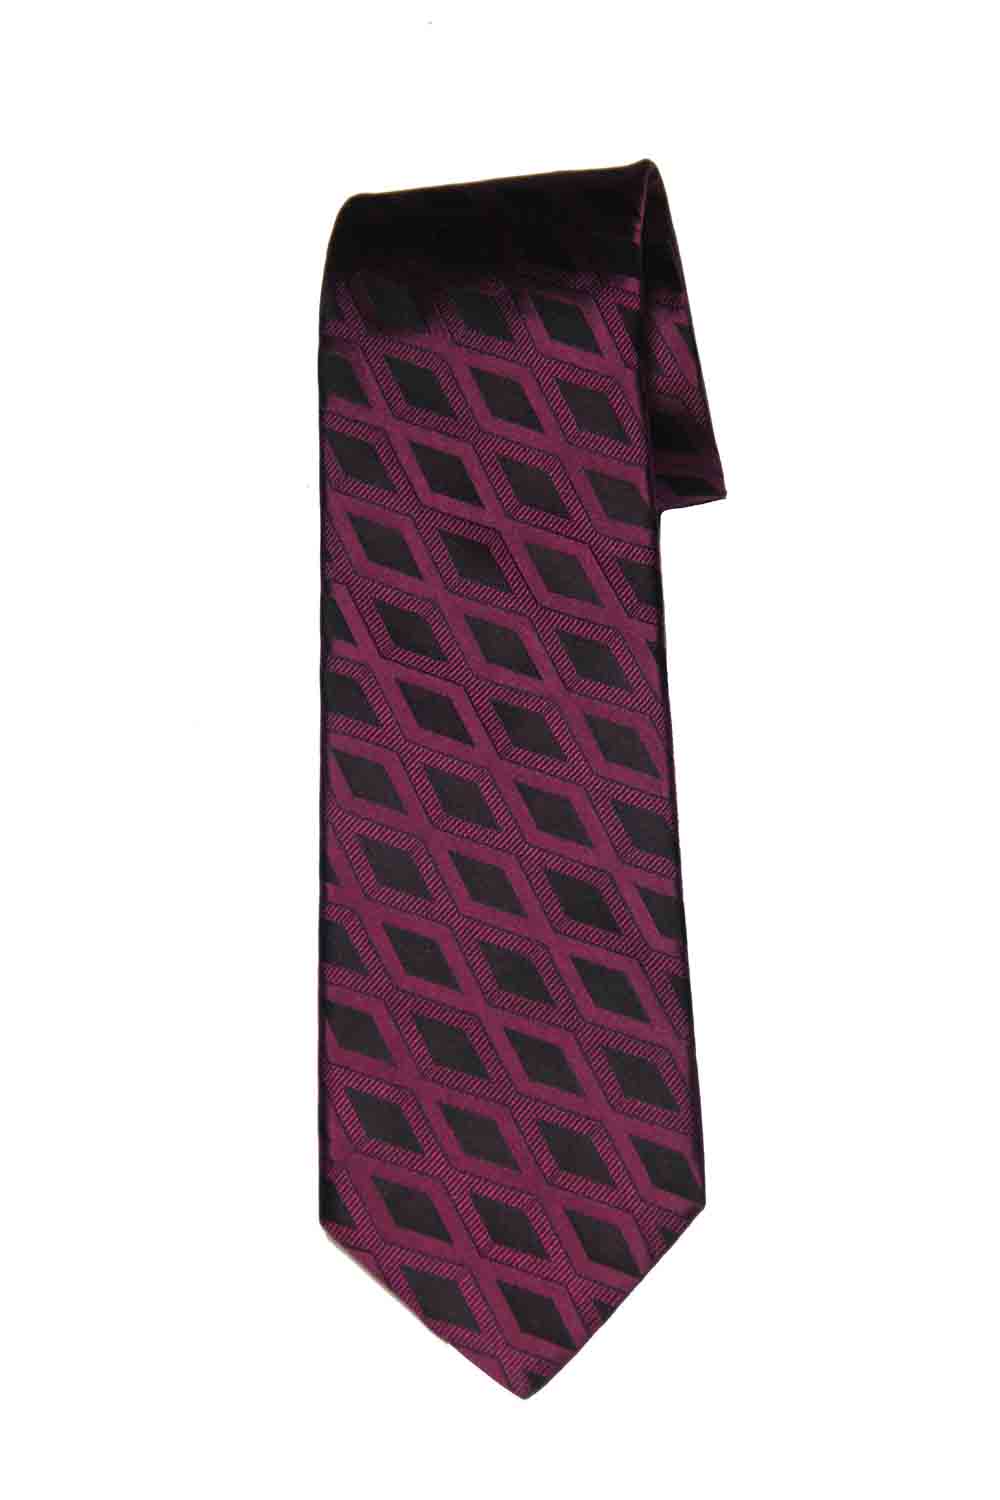 Murano Silk Necktie Tie Purple Black Geometric Diamond Patter Men's